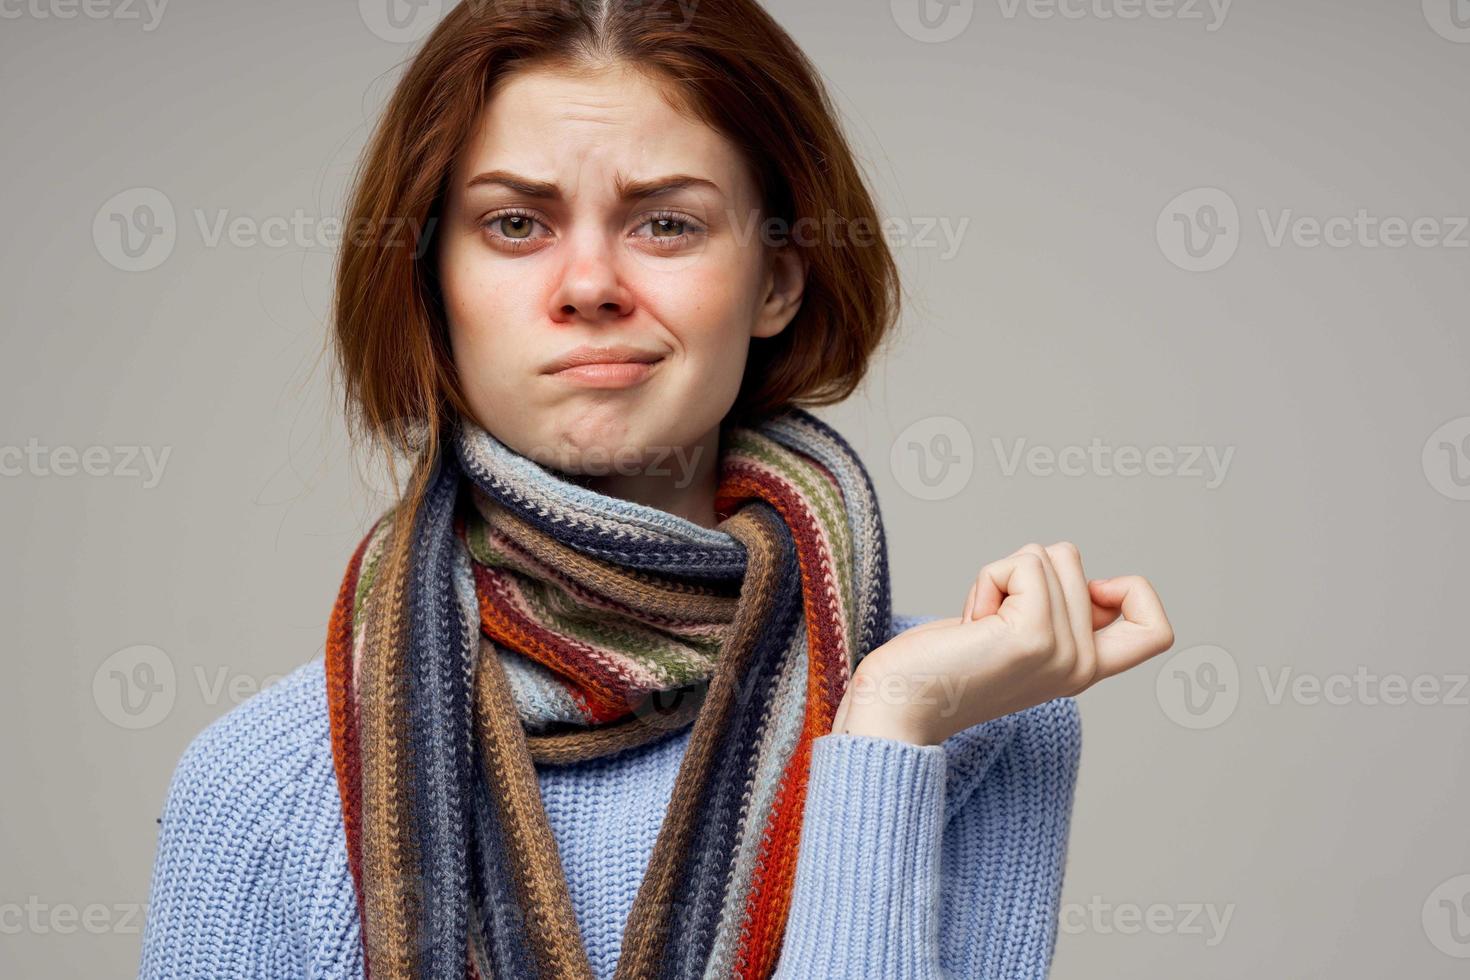 woman neck scarf cold handkerchief light background photo